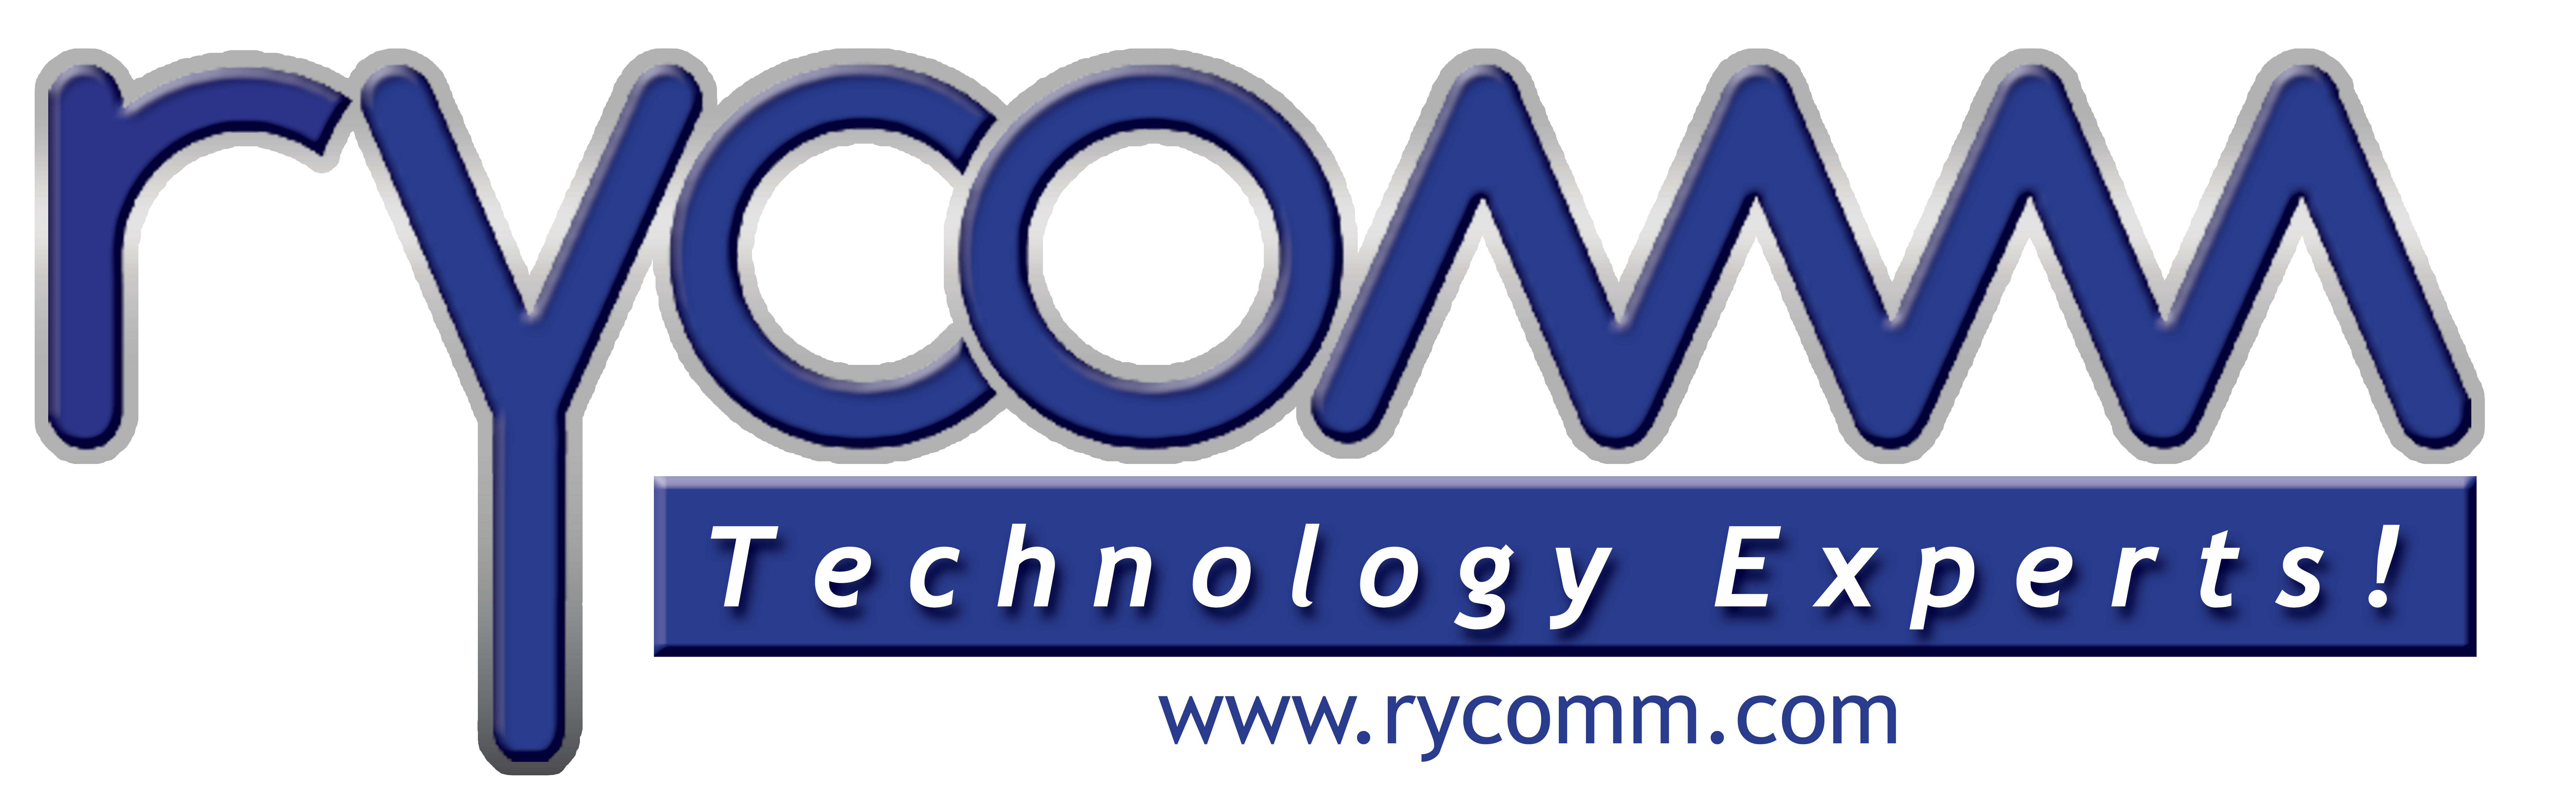 RYCOMM Technology Experts